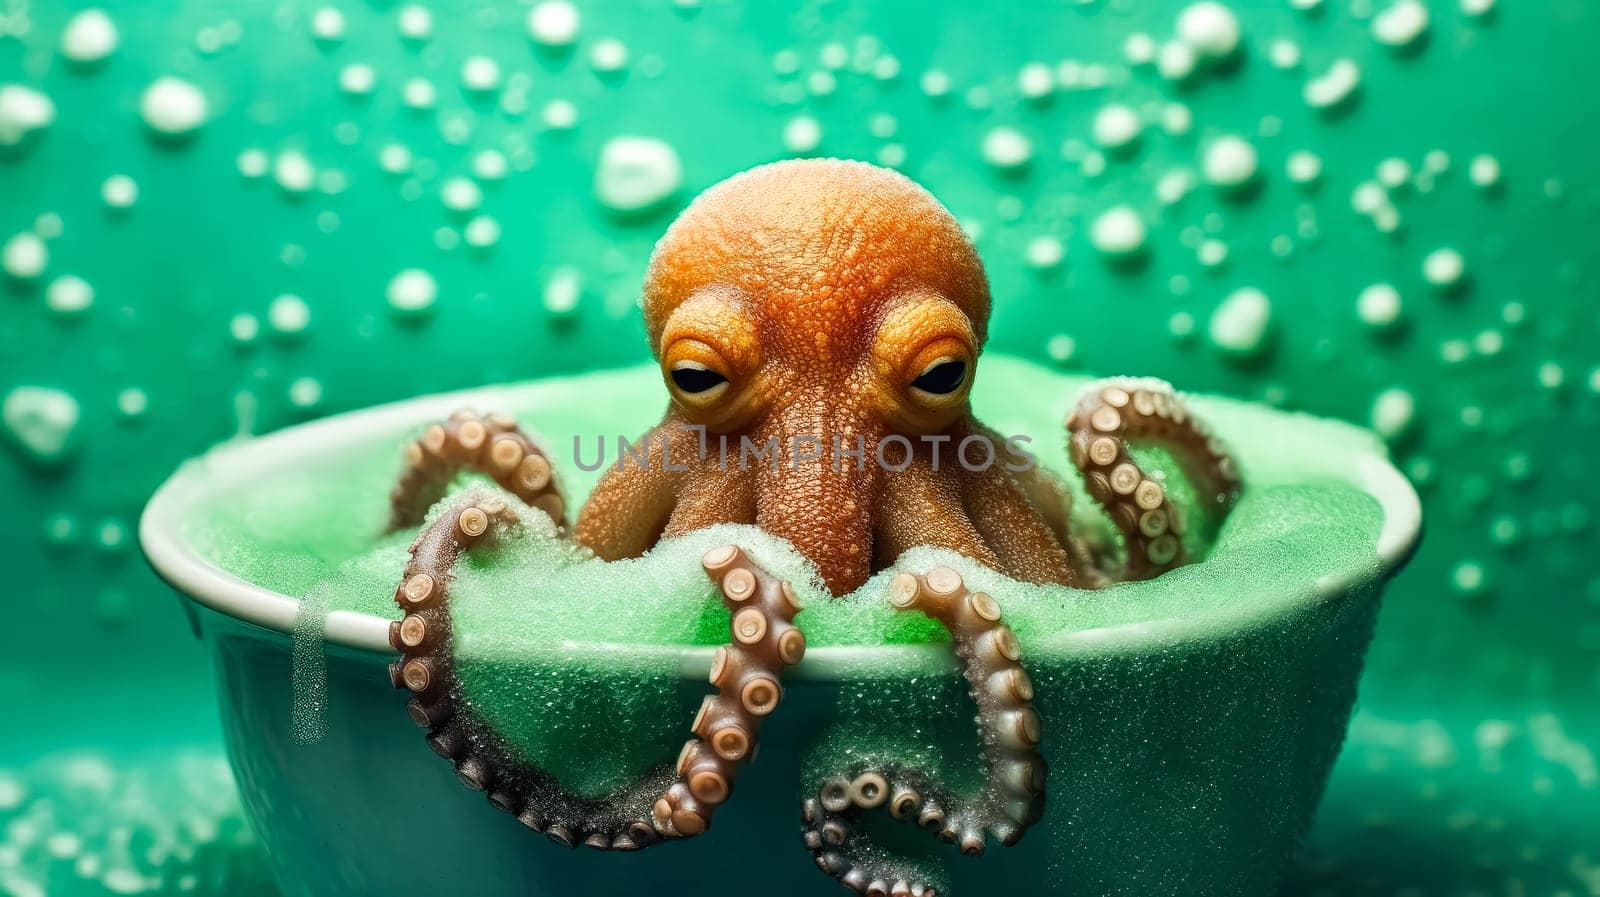 A charming small octopus enjoys a bubble bath by Alla_Morozova93